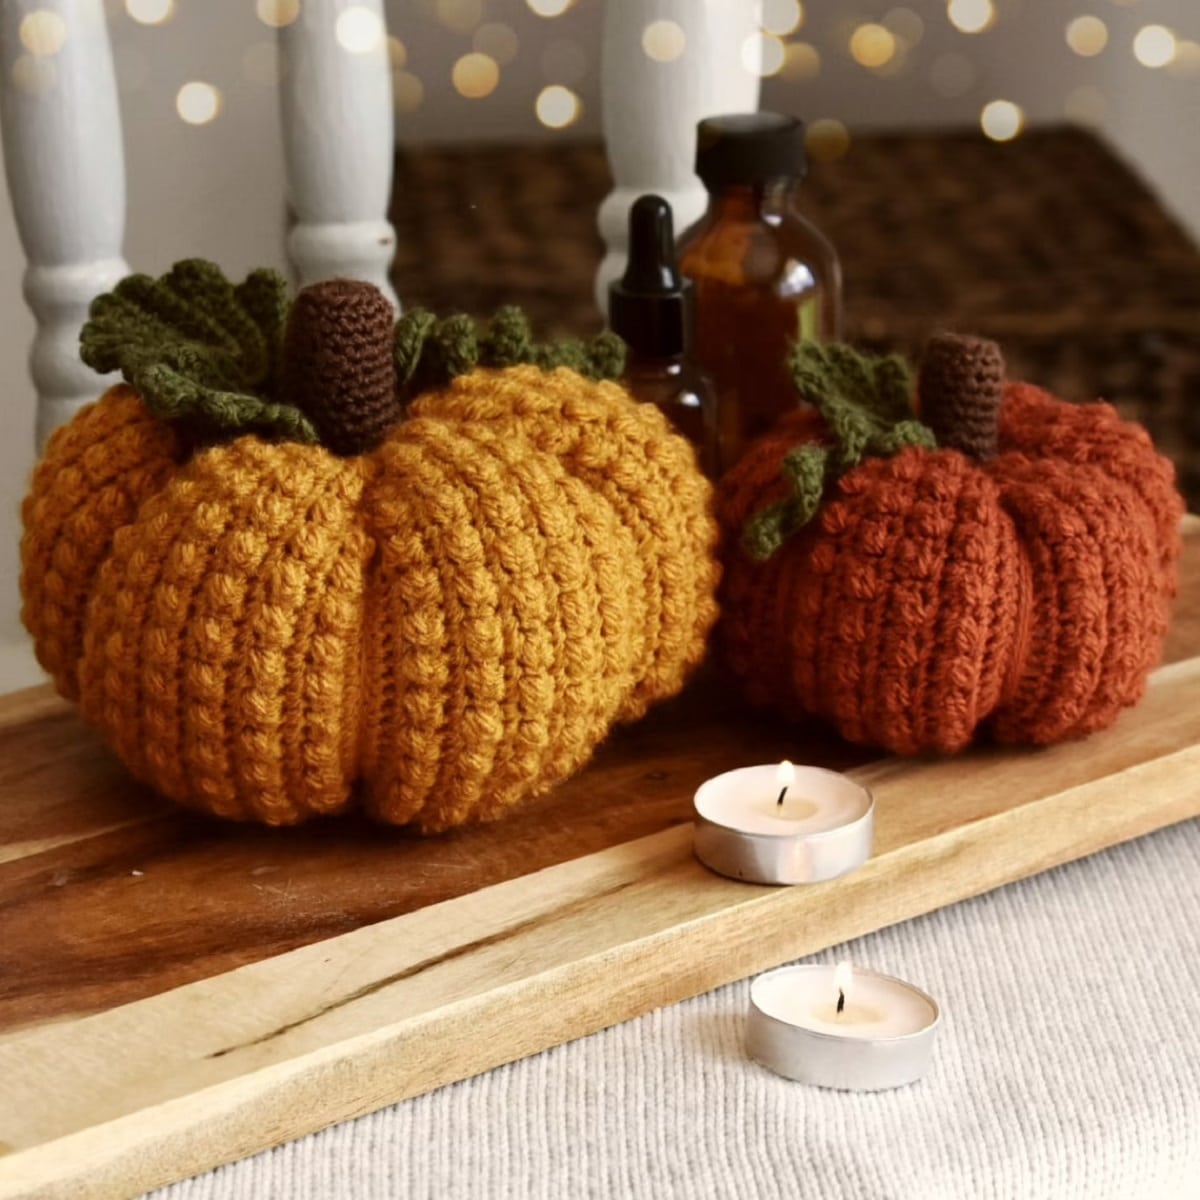 A light orange crochet pumpkin with bobbles all over next to a dark orange pumpkin with the same pattern.